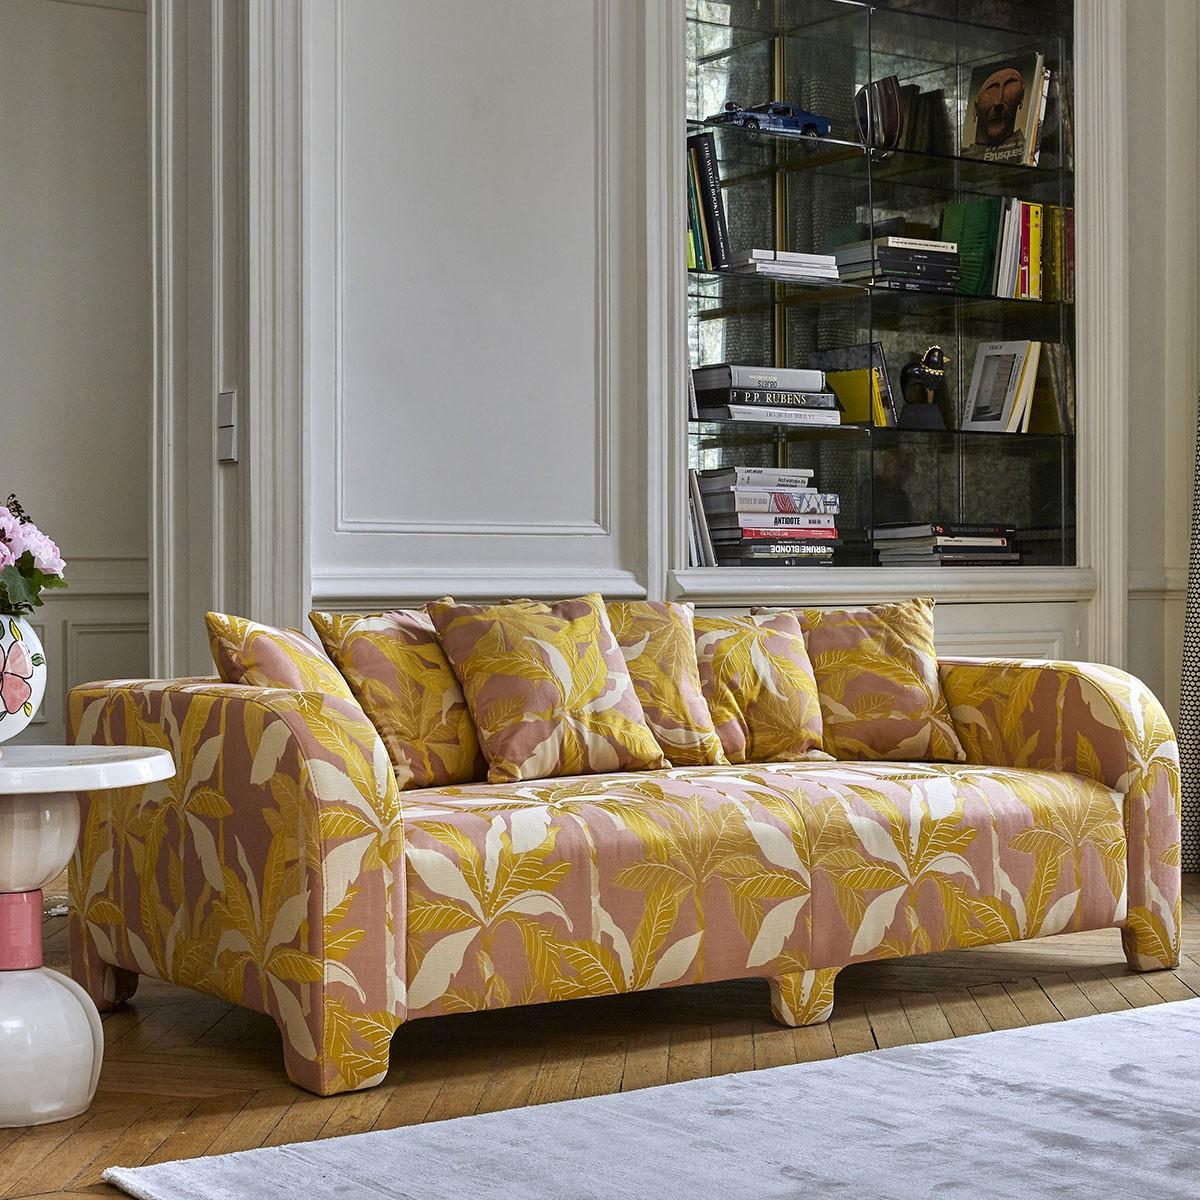 Popus Editions Graziella 3 Seater Sofa in Marine London Linen Fabric In New Condition For Sale In Paris, FR